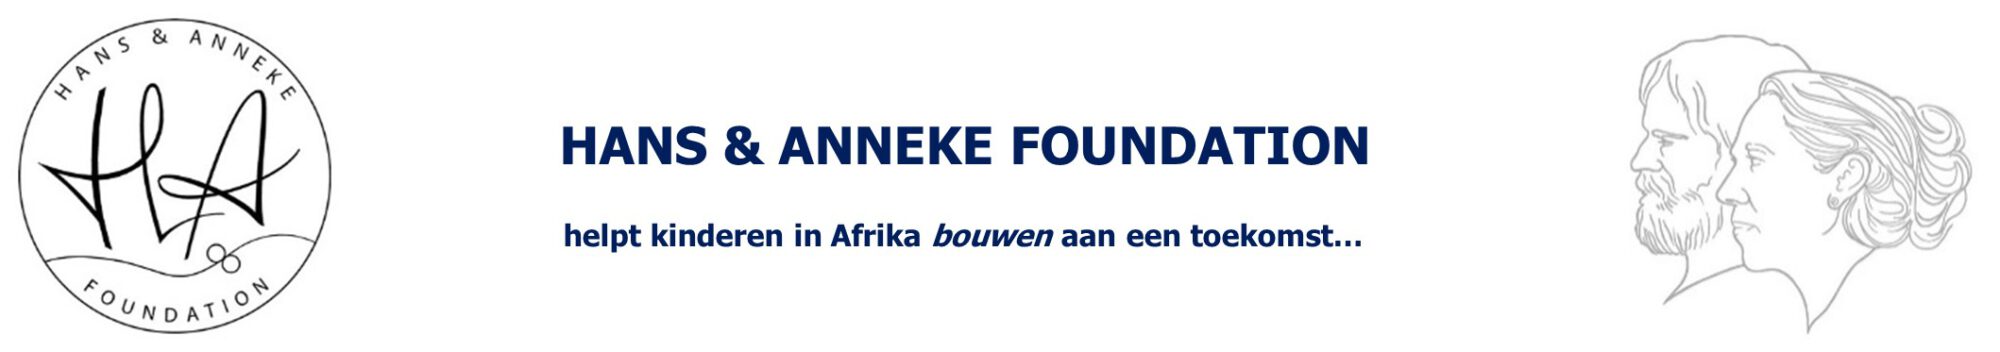 Hans & Anneke Foundation